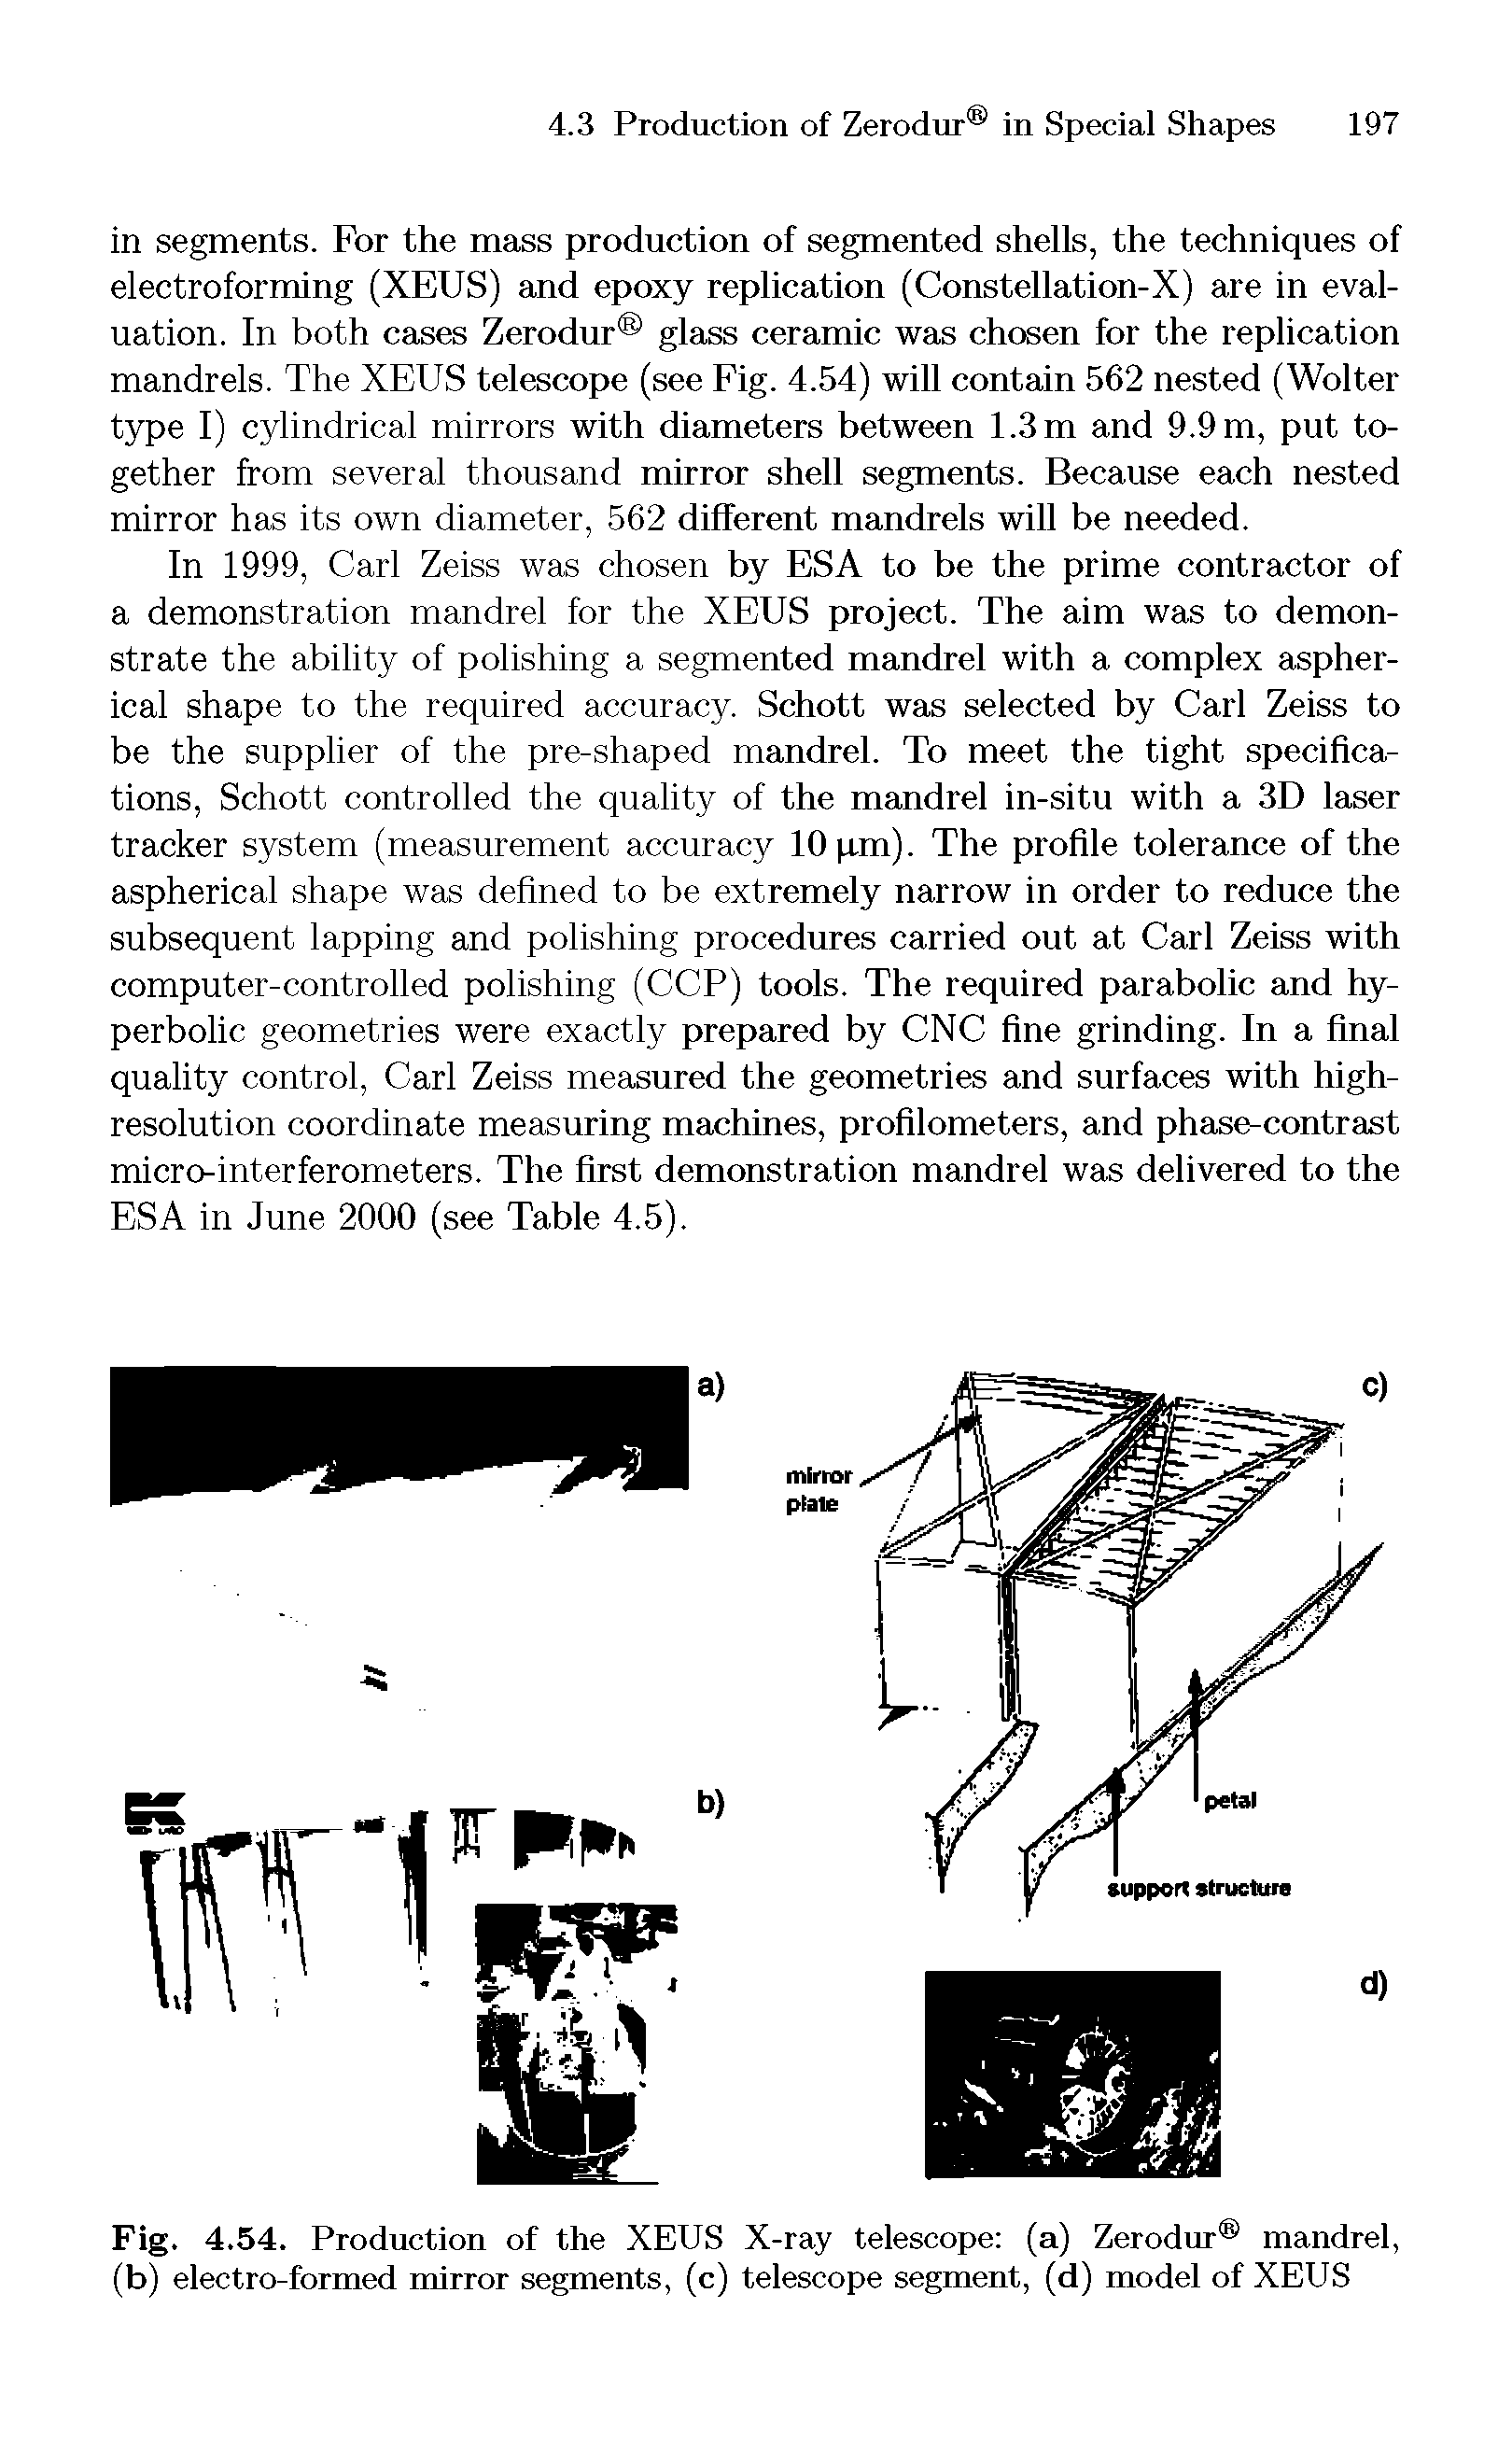 Fig. 4.54. Production of the XEUS X-ray telescope (a) Zerodur mandrel, (b) electro-formed mirror segments, (c) telescope segment, (d) model of XEUS...